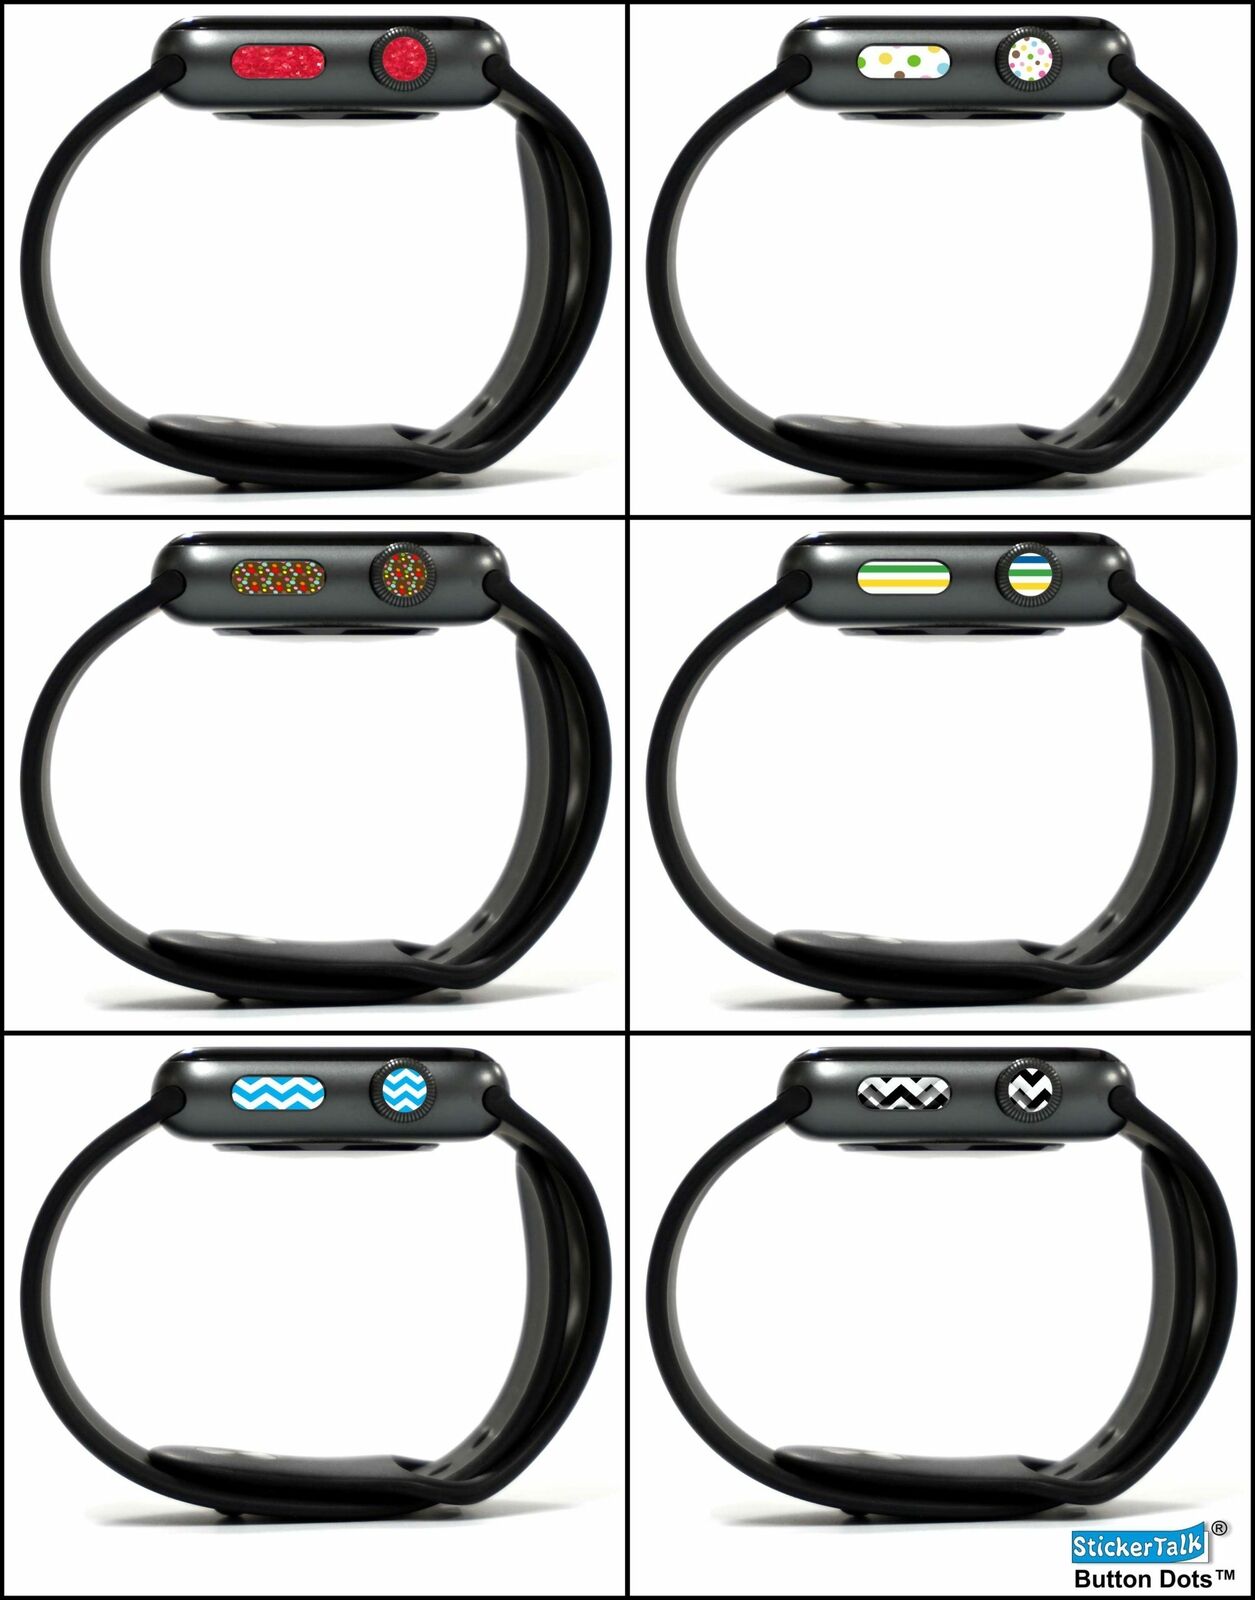 StickerTalk® Brand [24x] Whimsical Apple Watch Crown Button Dots™ Stickers